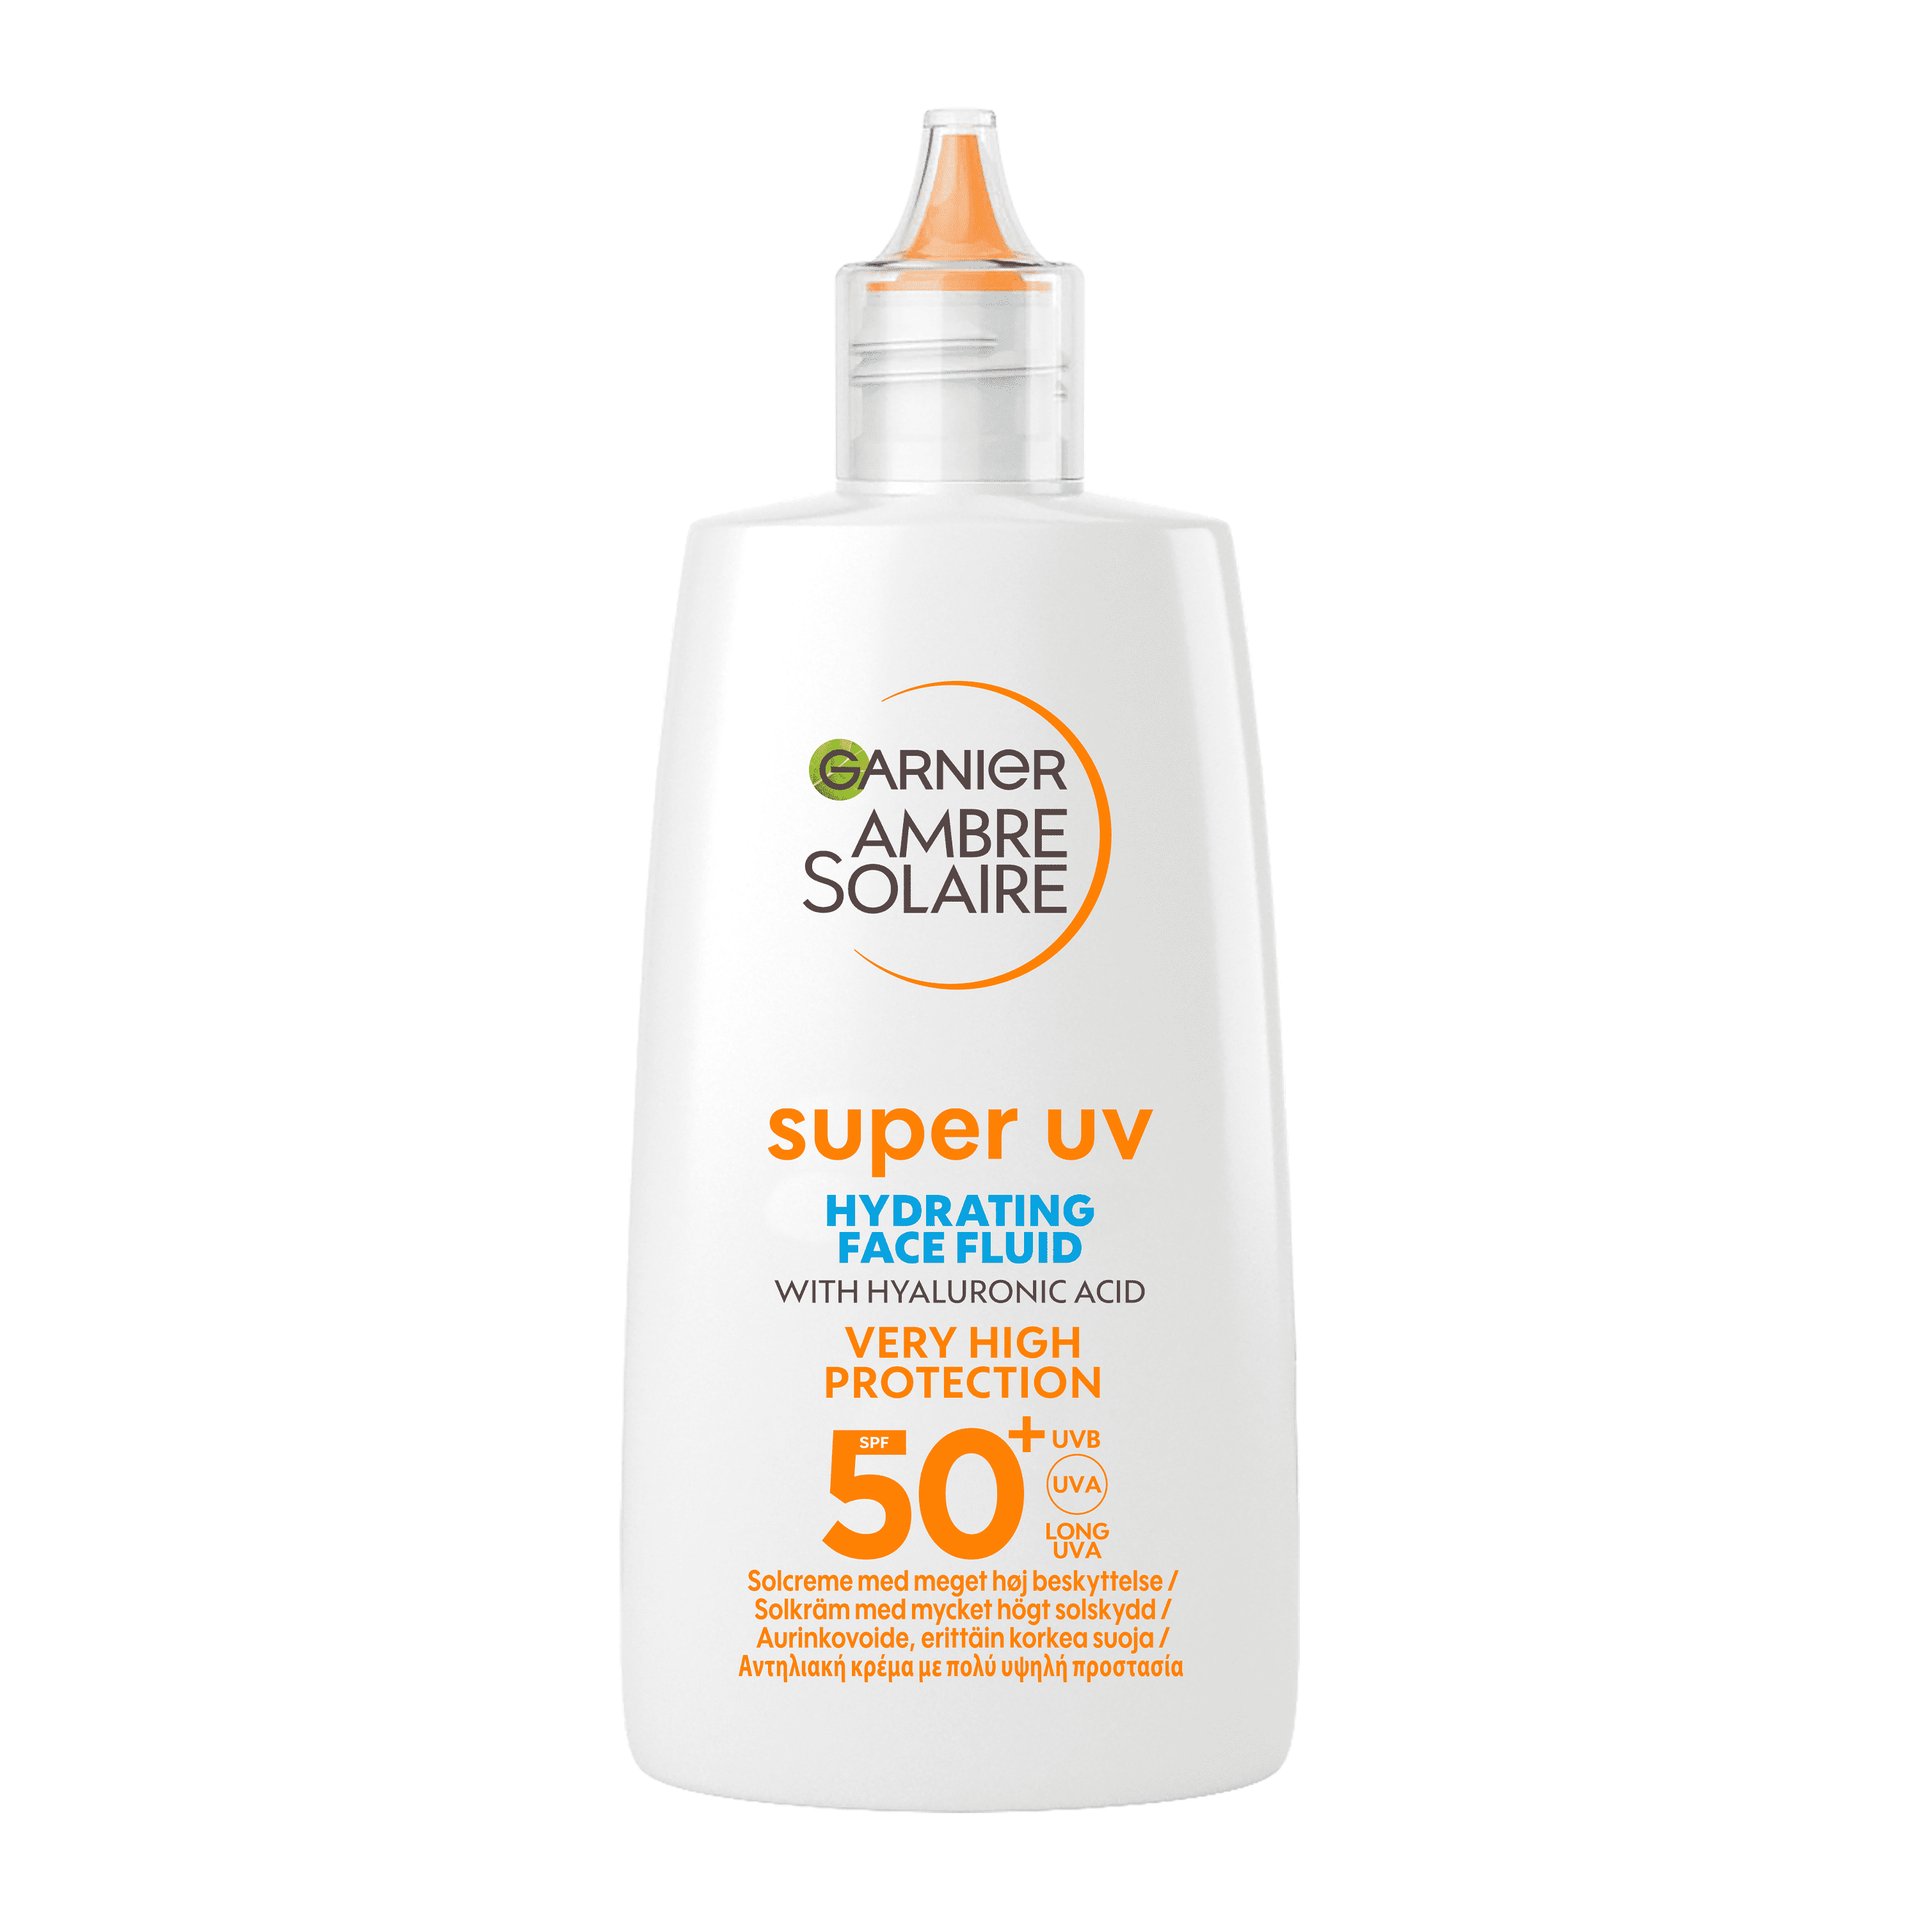 Super UV Anti-Dark Spots and Anti-Pollution Fluid SPF 50 Plus